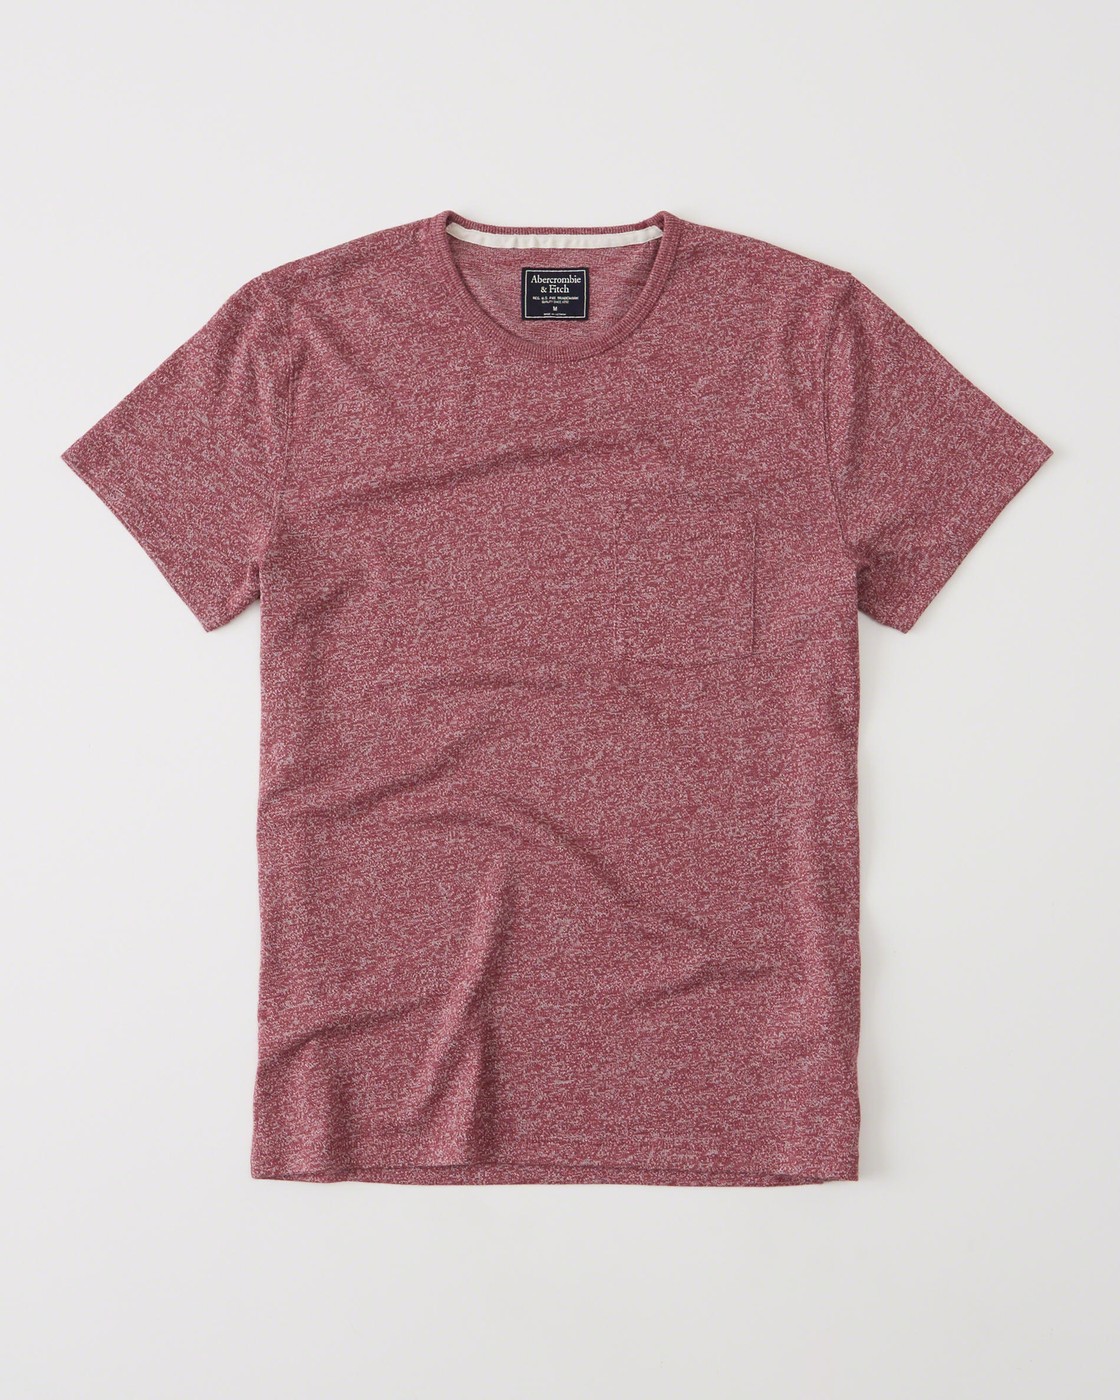 Красная футболка - мужская футболка Abercrombie & Fitch